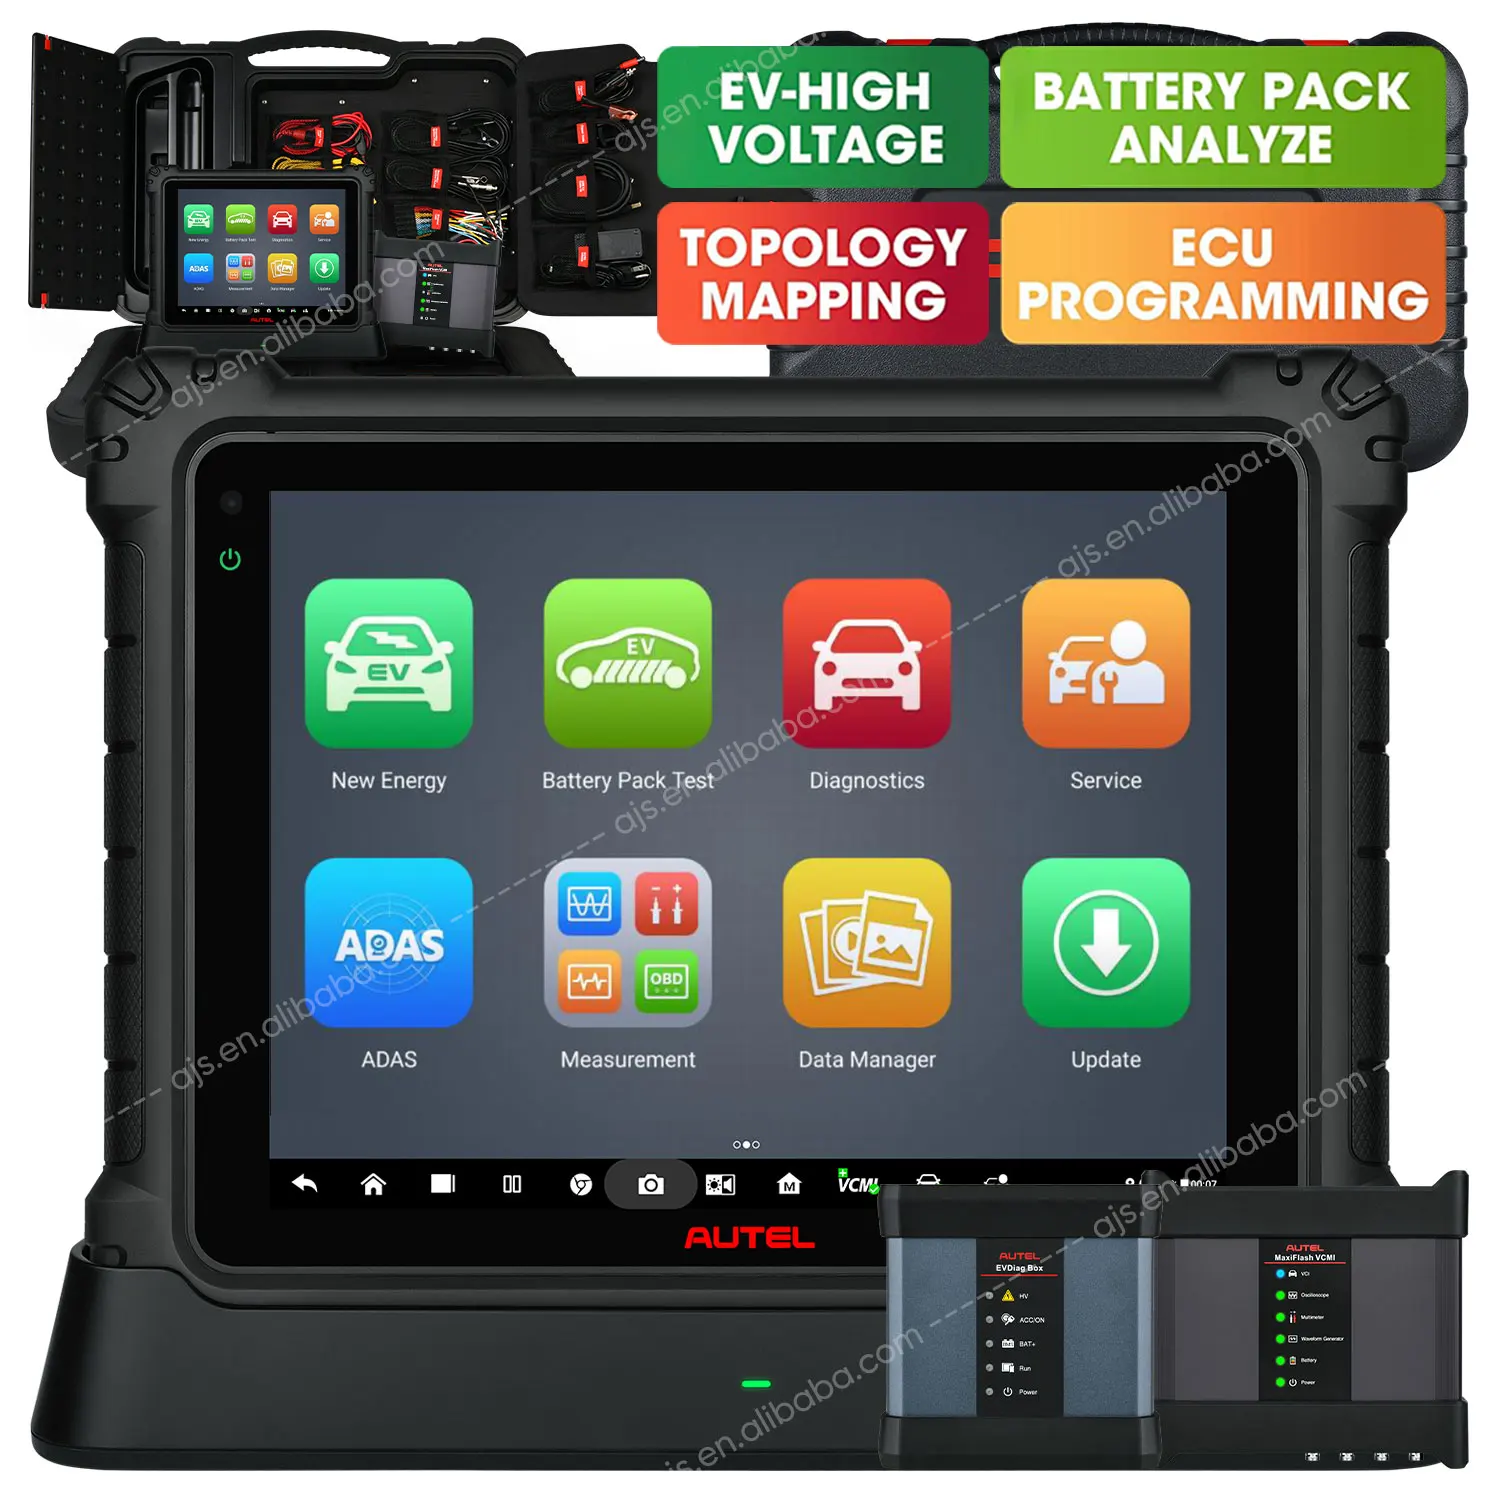 

Autel MaxiSys Ultra EV J2534 Programming 5in1 VCMI Intelligent EV Diagnostic Tools Electric Auto Altar Diagnostic Tool Scanner